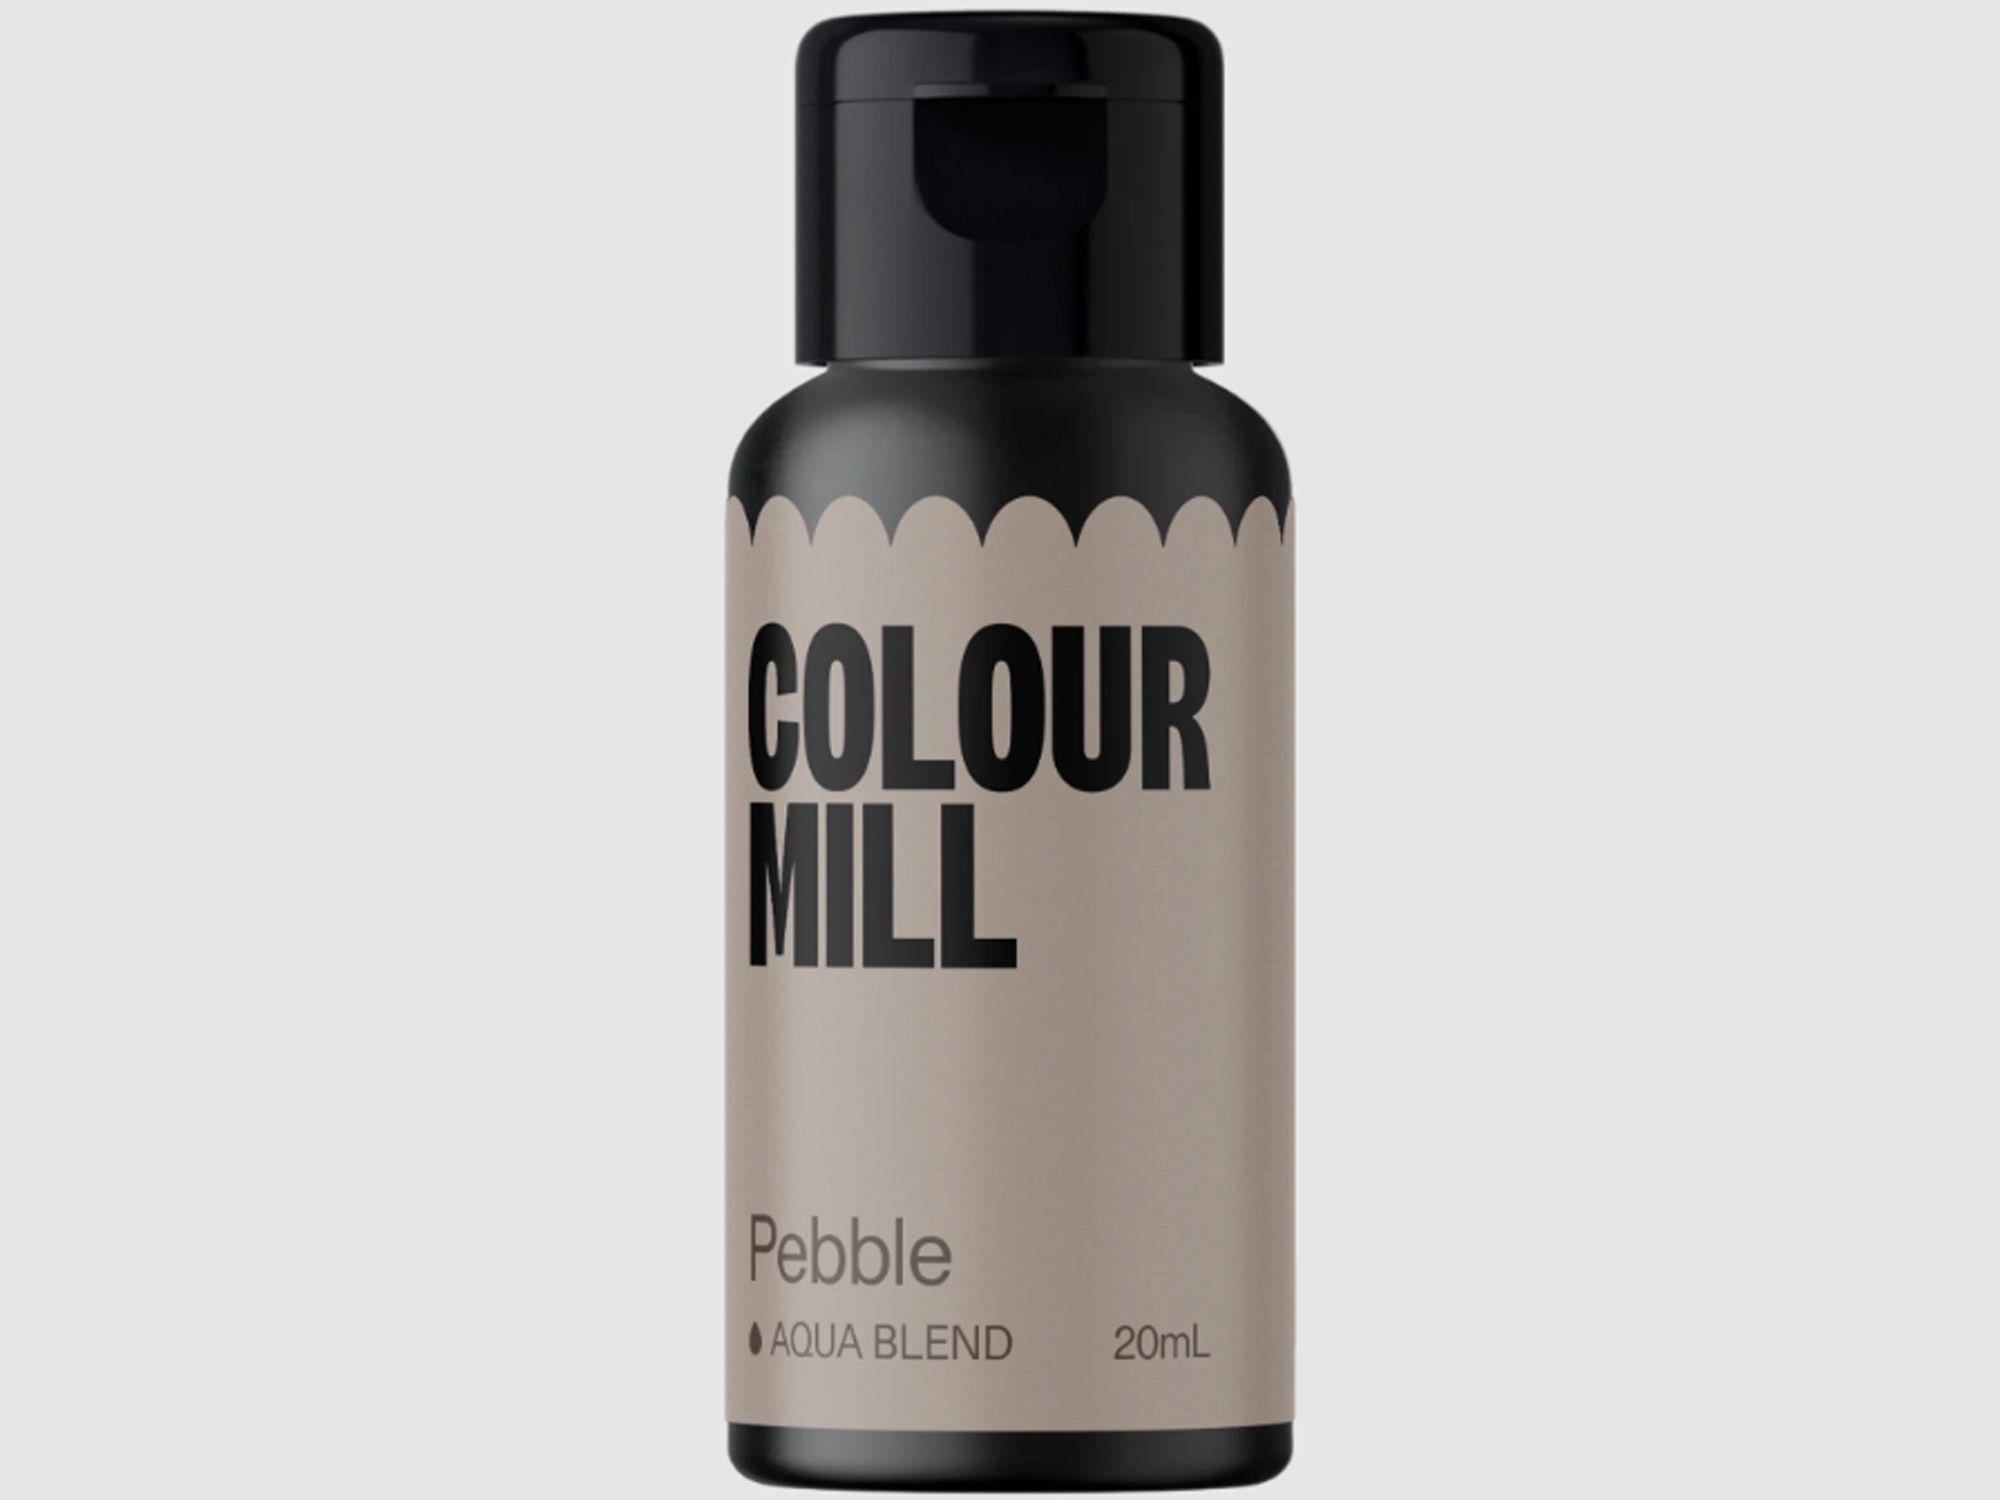 Colour Mill Pebble (Aqua Blend) 20ml